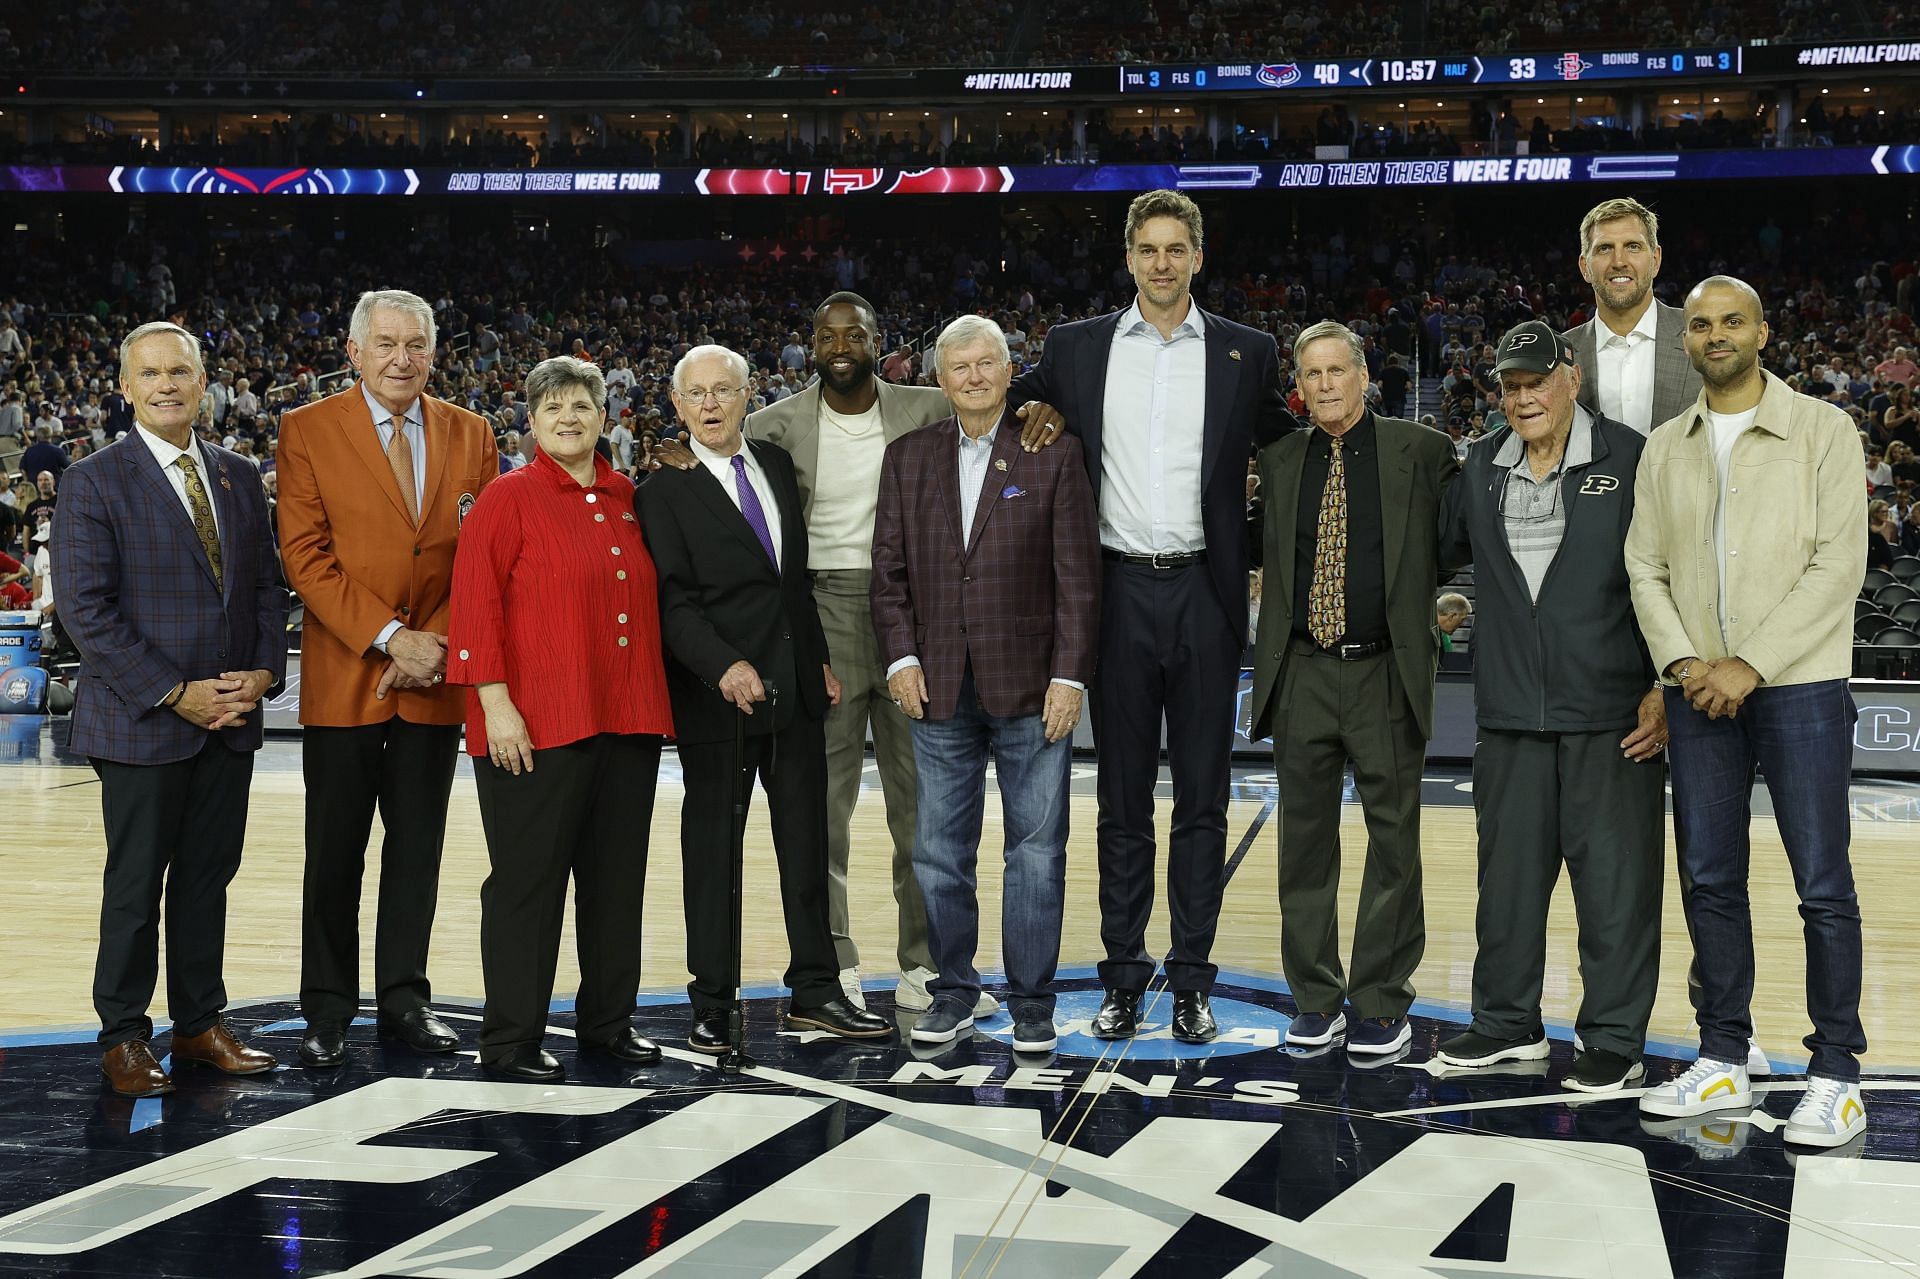 NBA Greats Dwyane Wade, Dirk Nowitzki Made Their Hall Of Fame